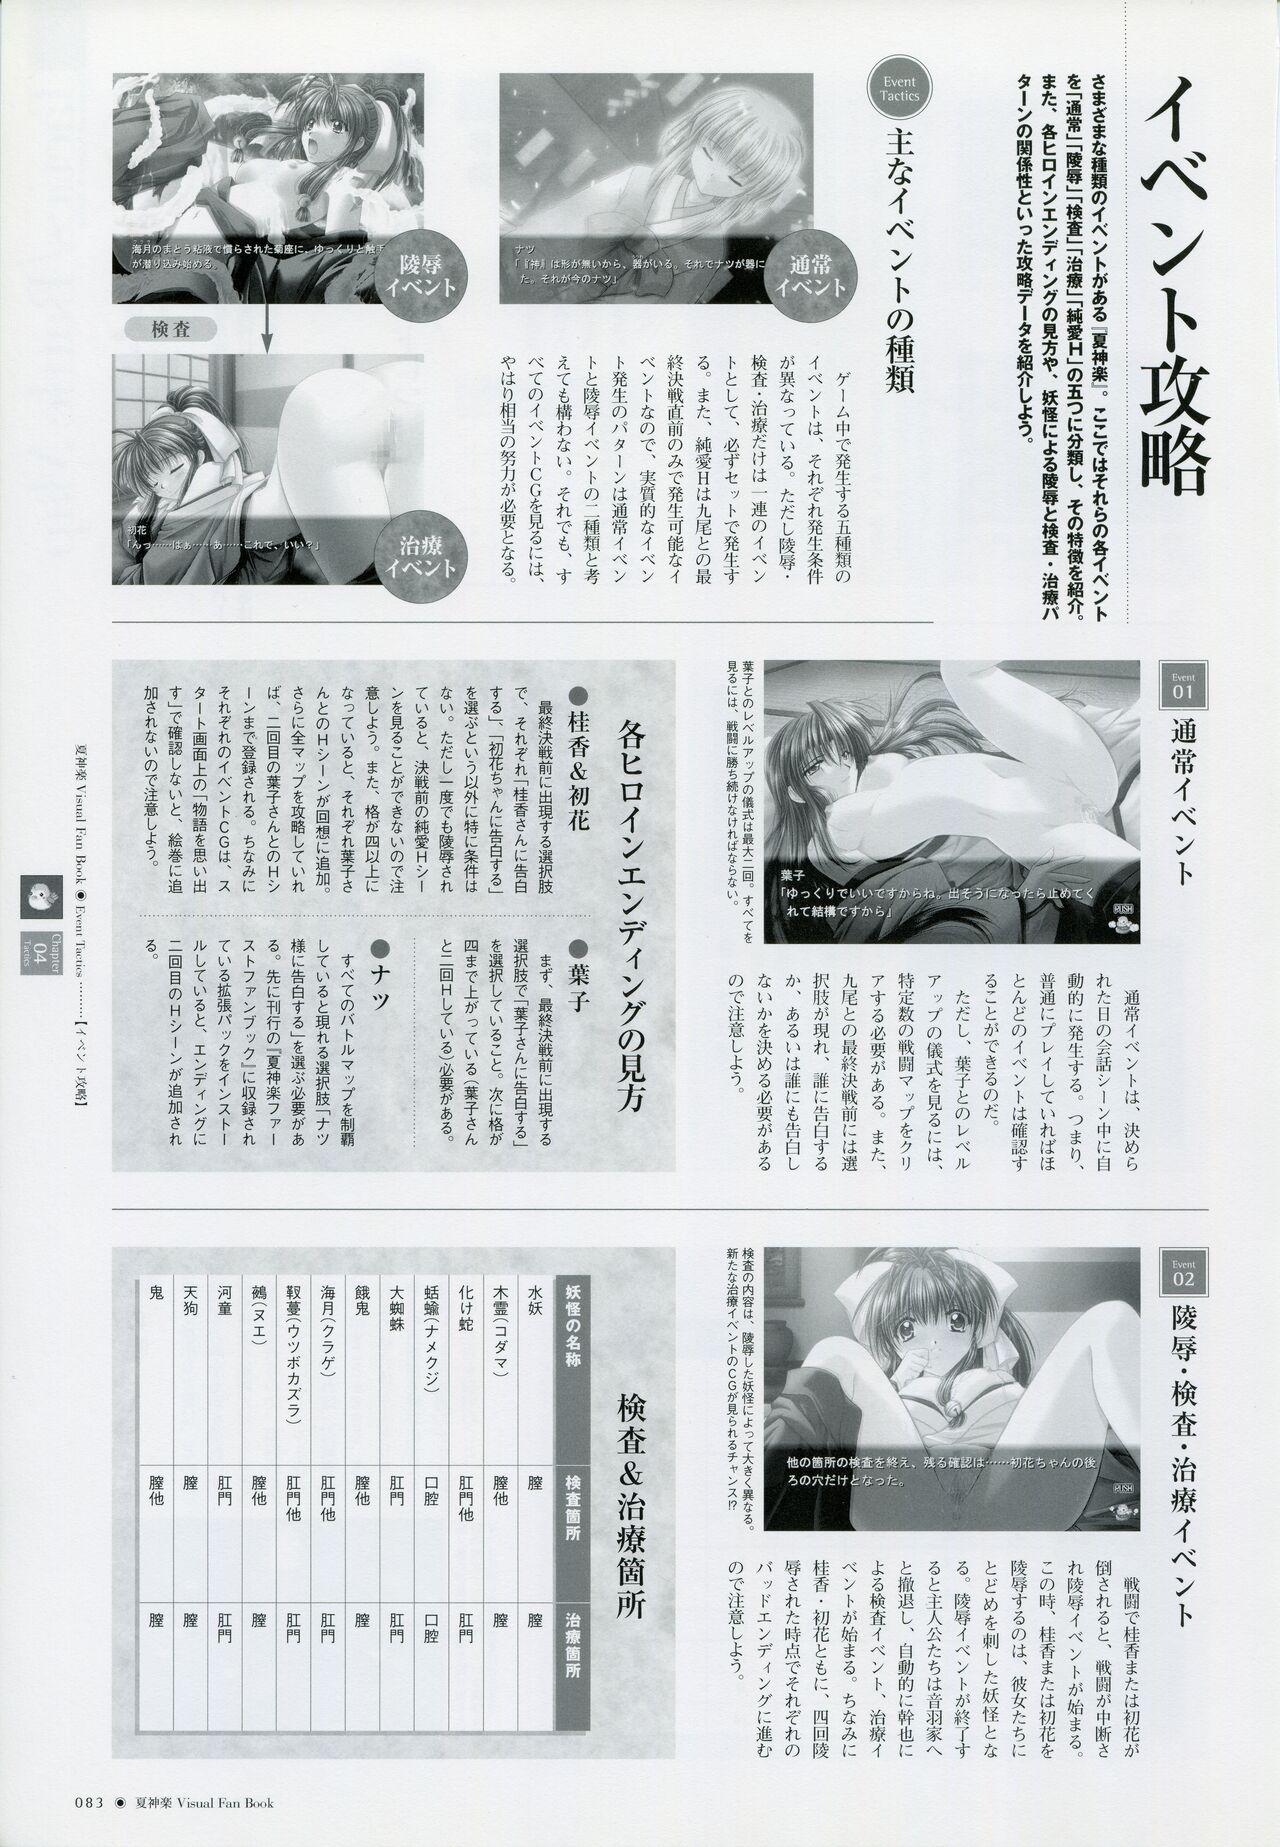 Natsukagura Visual Fan Book 89